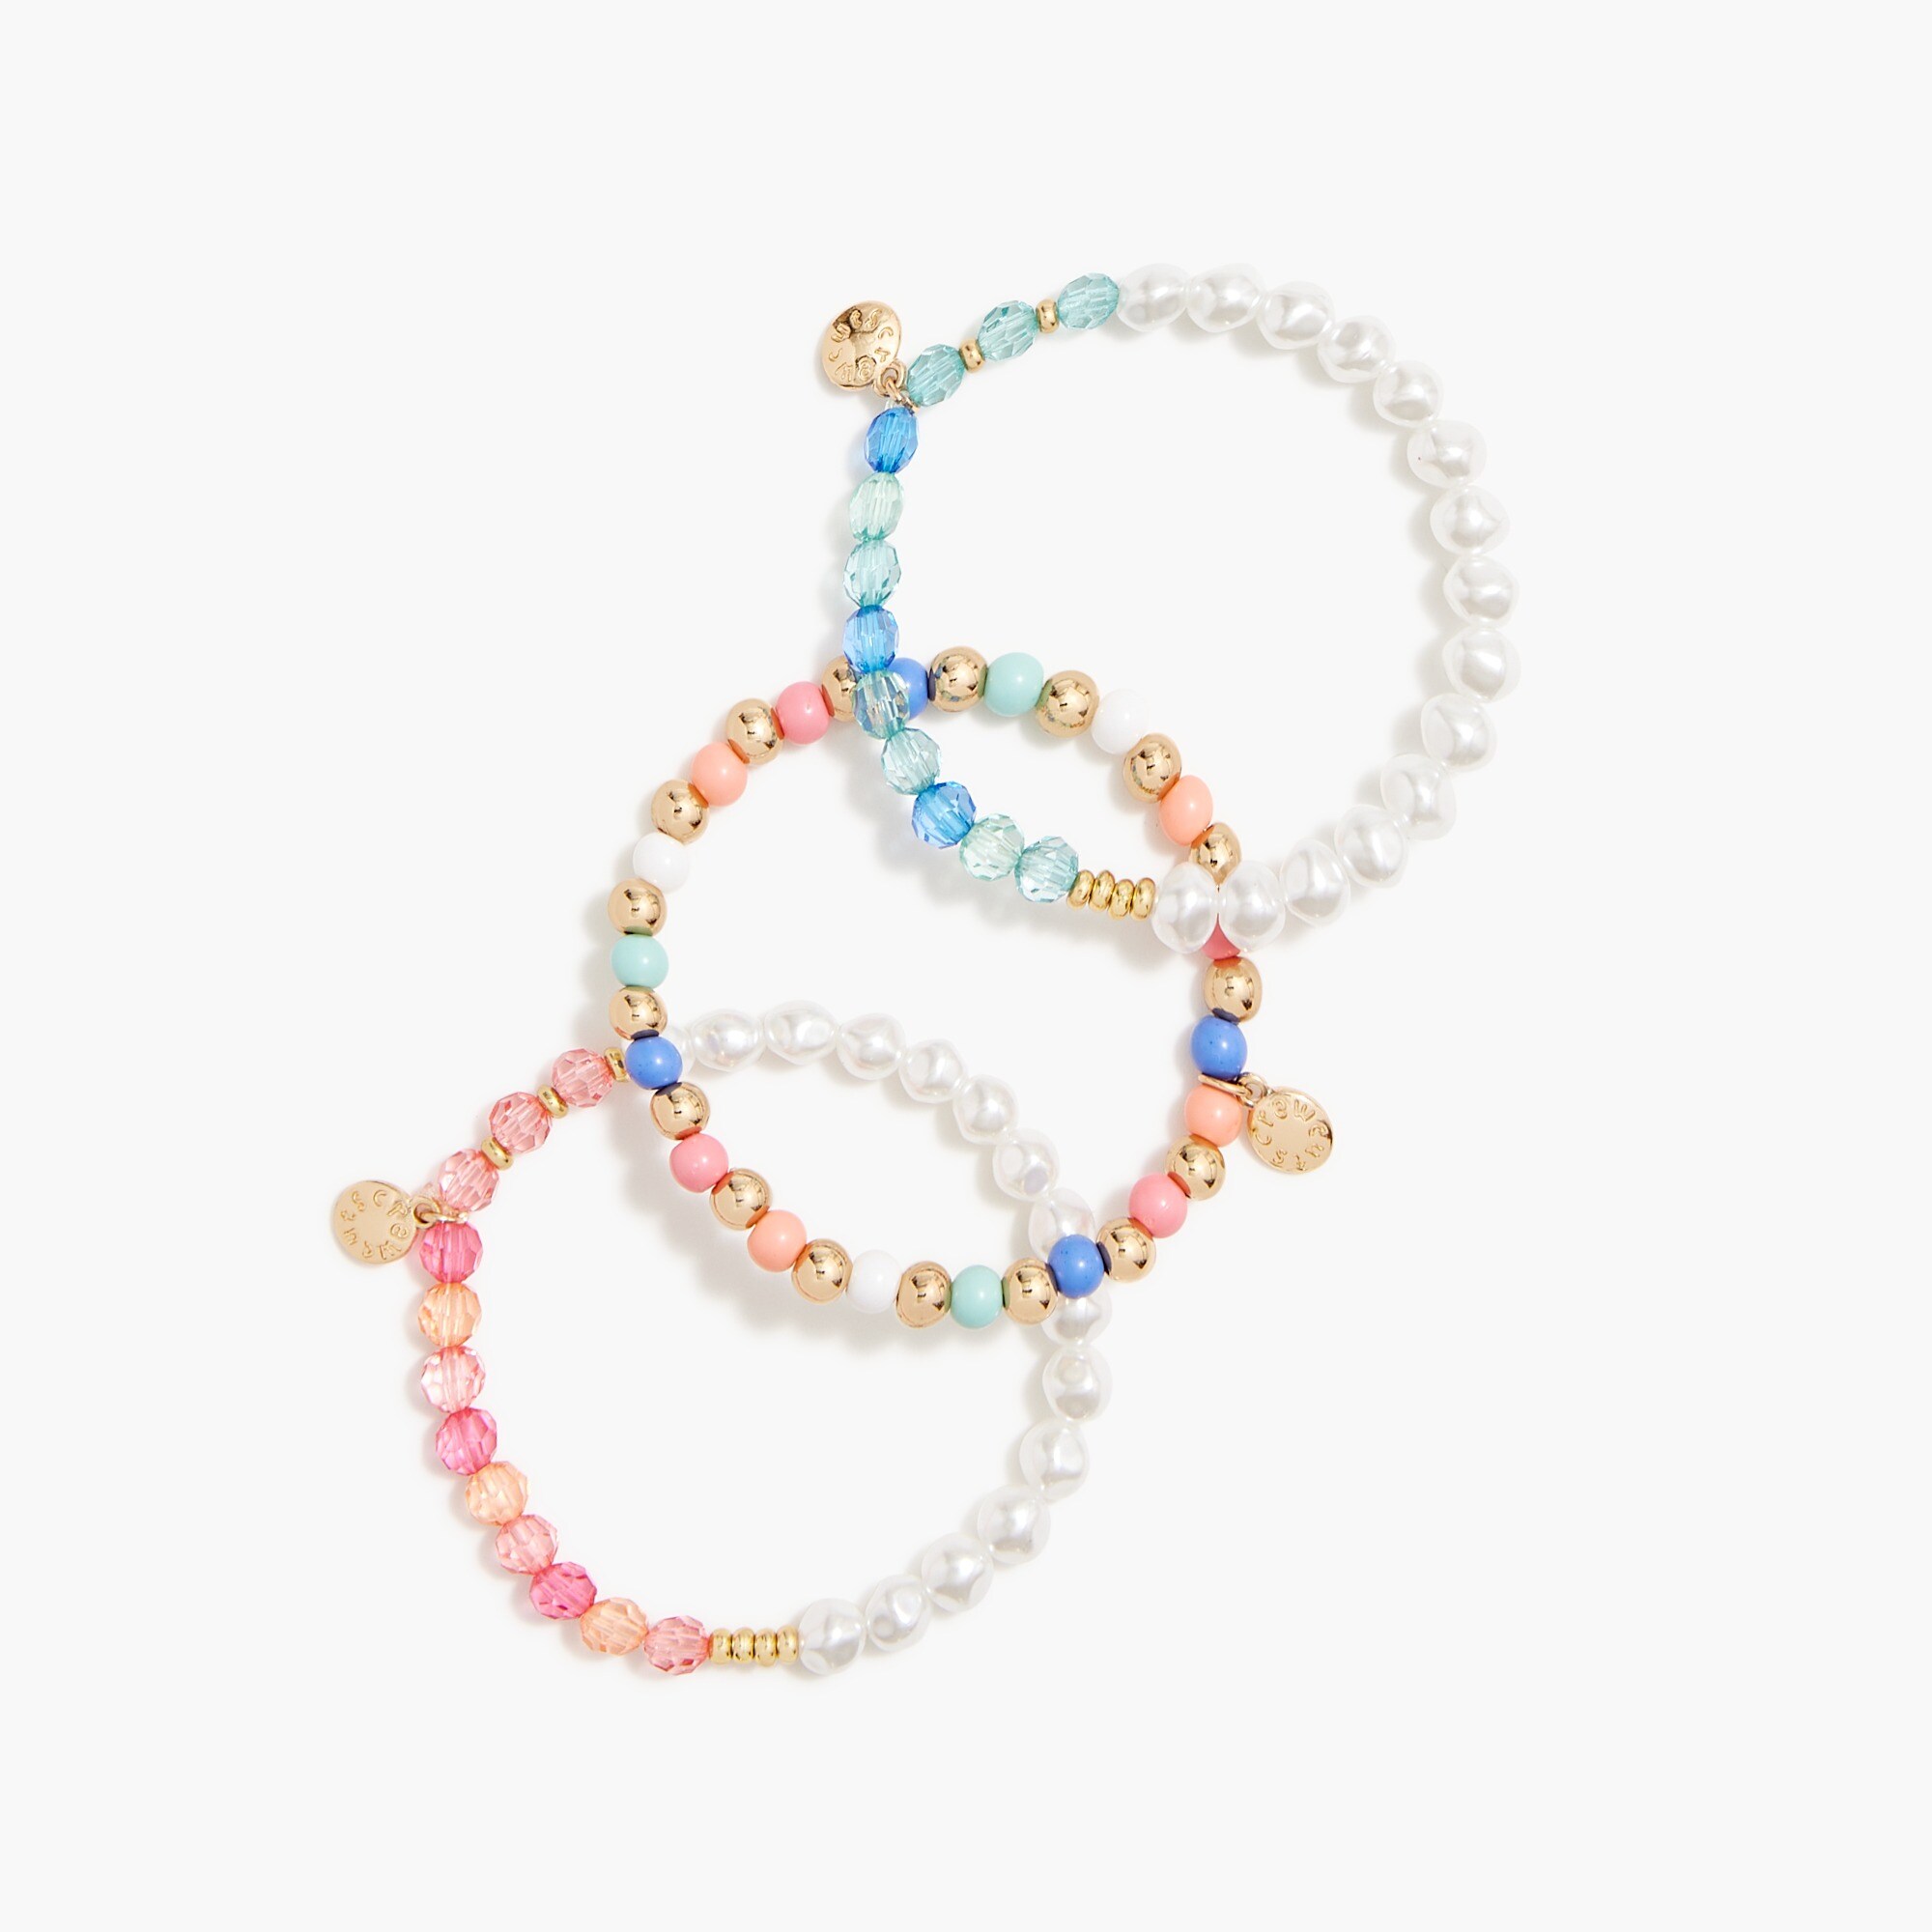  Girls' mixed-bead bracelets set-of-three